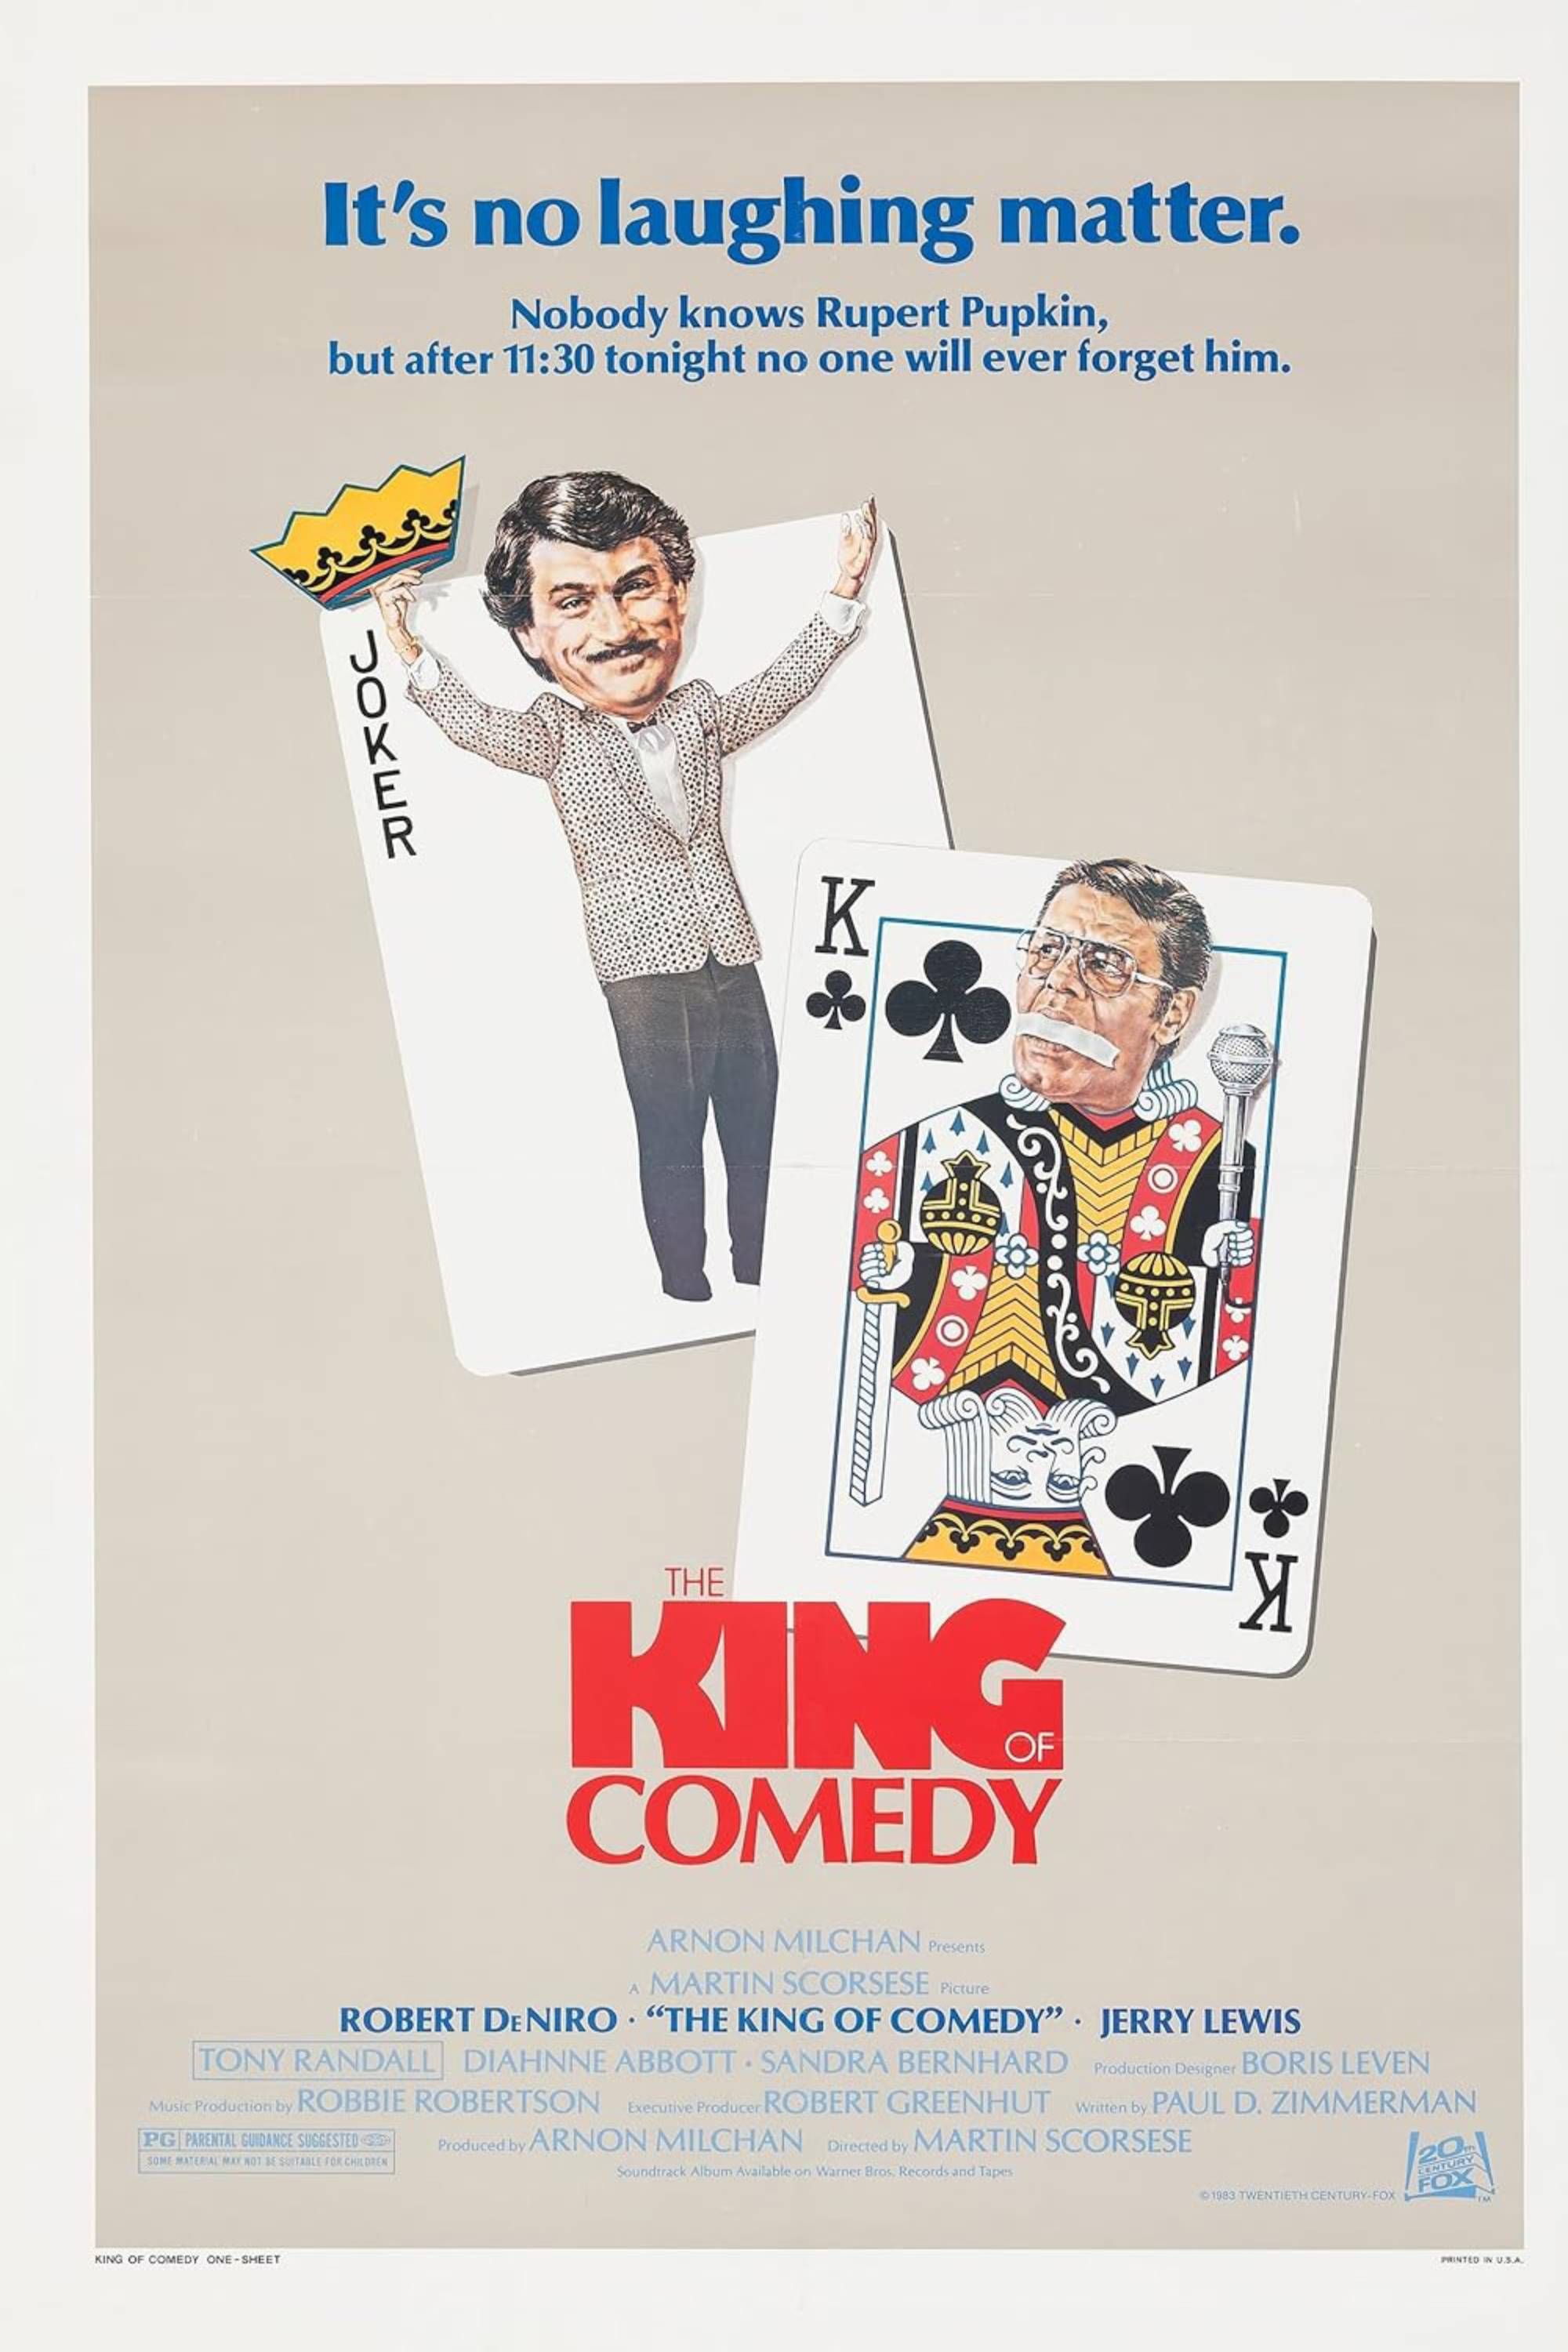 The King of Comedy - Poster - Robert De Niro